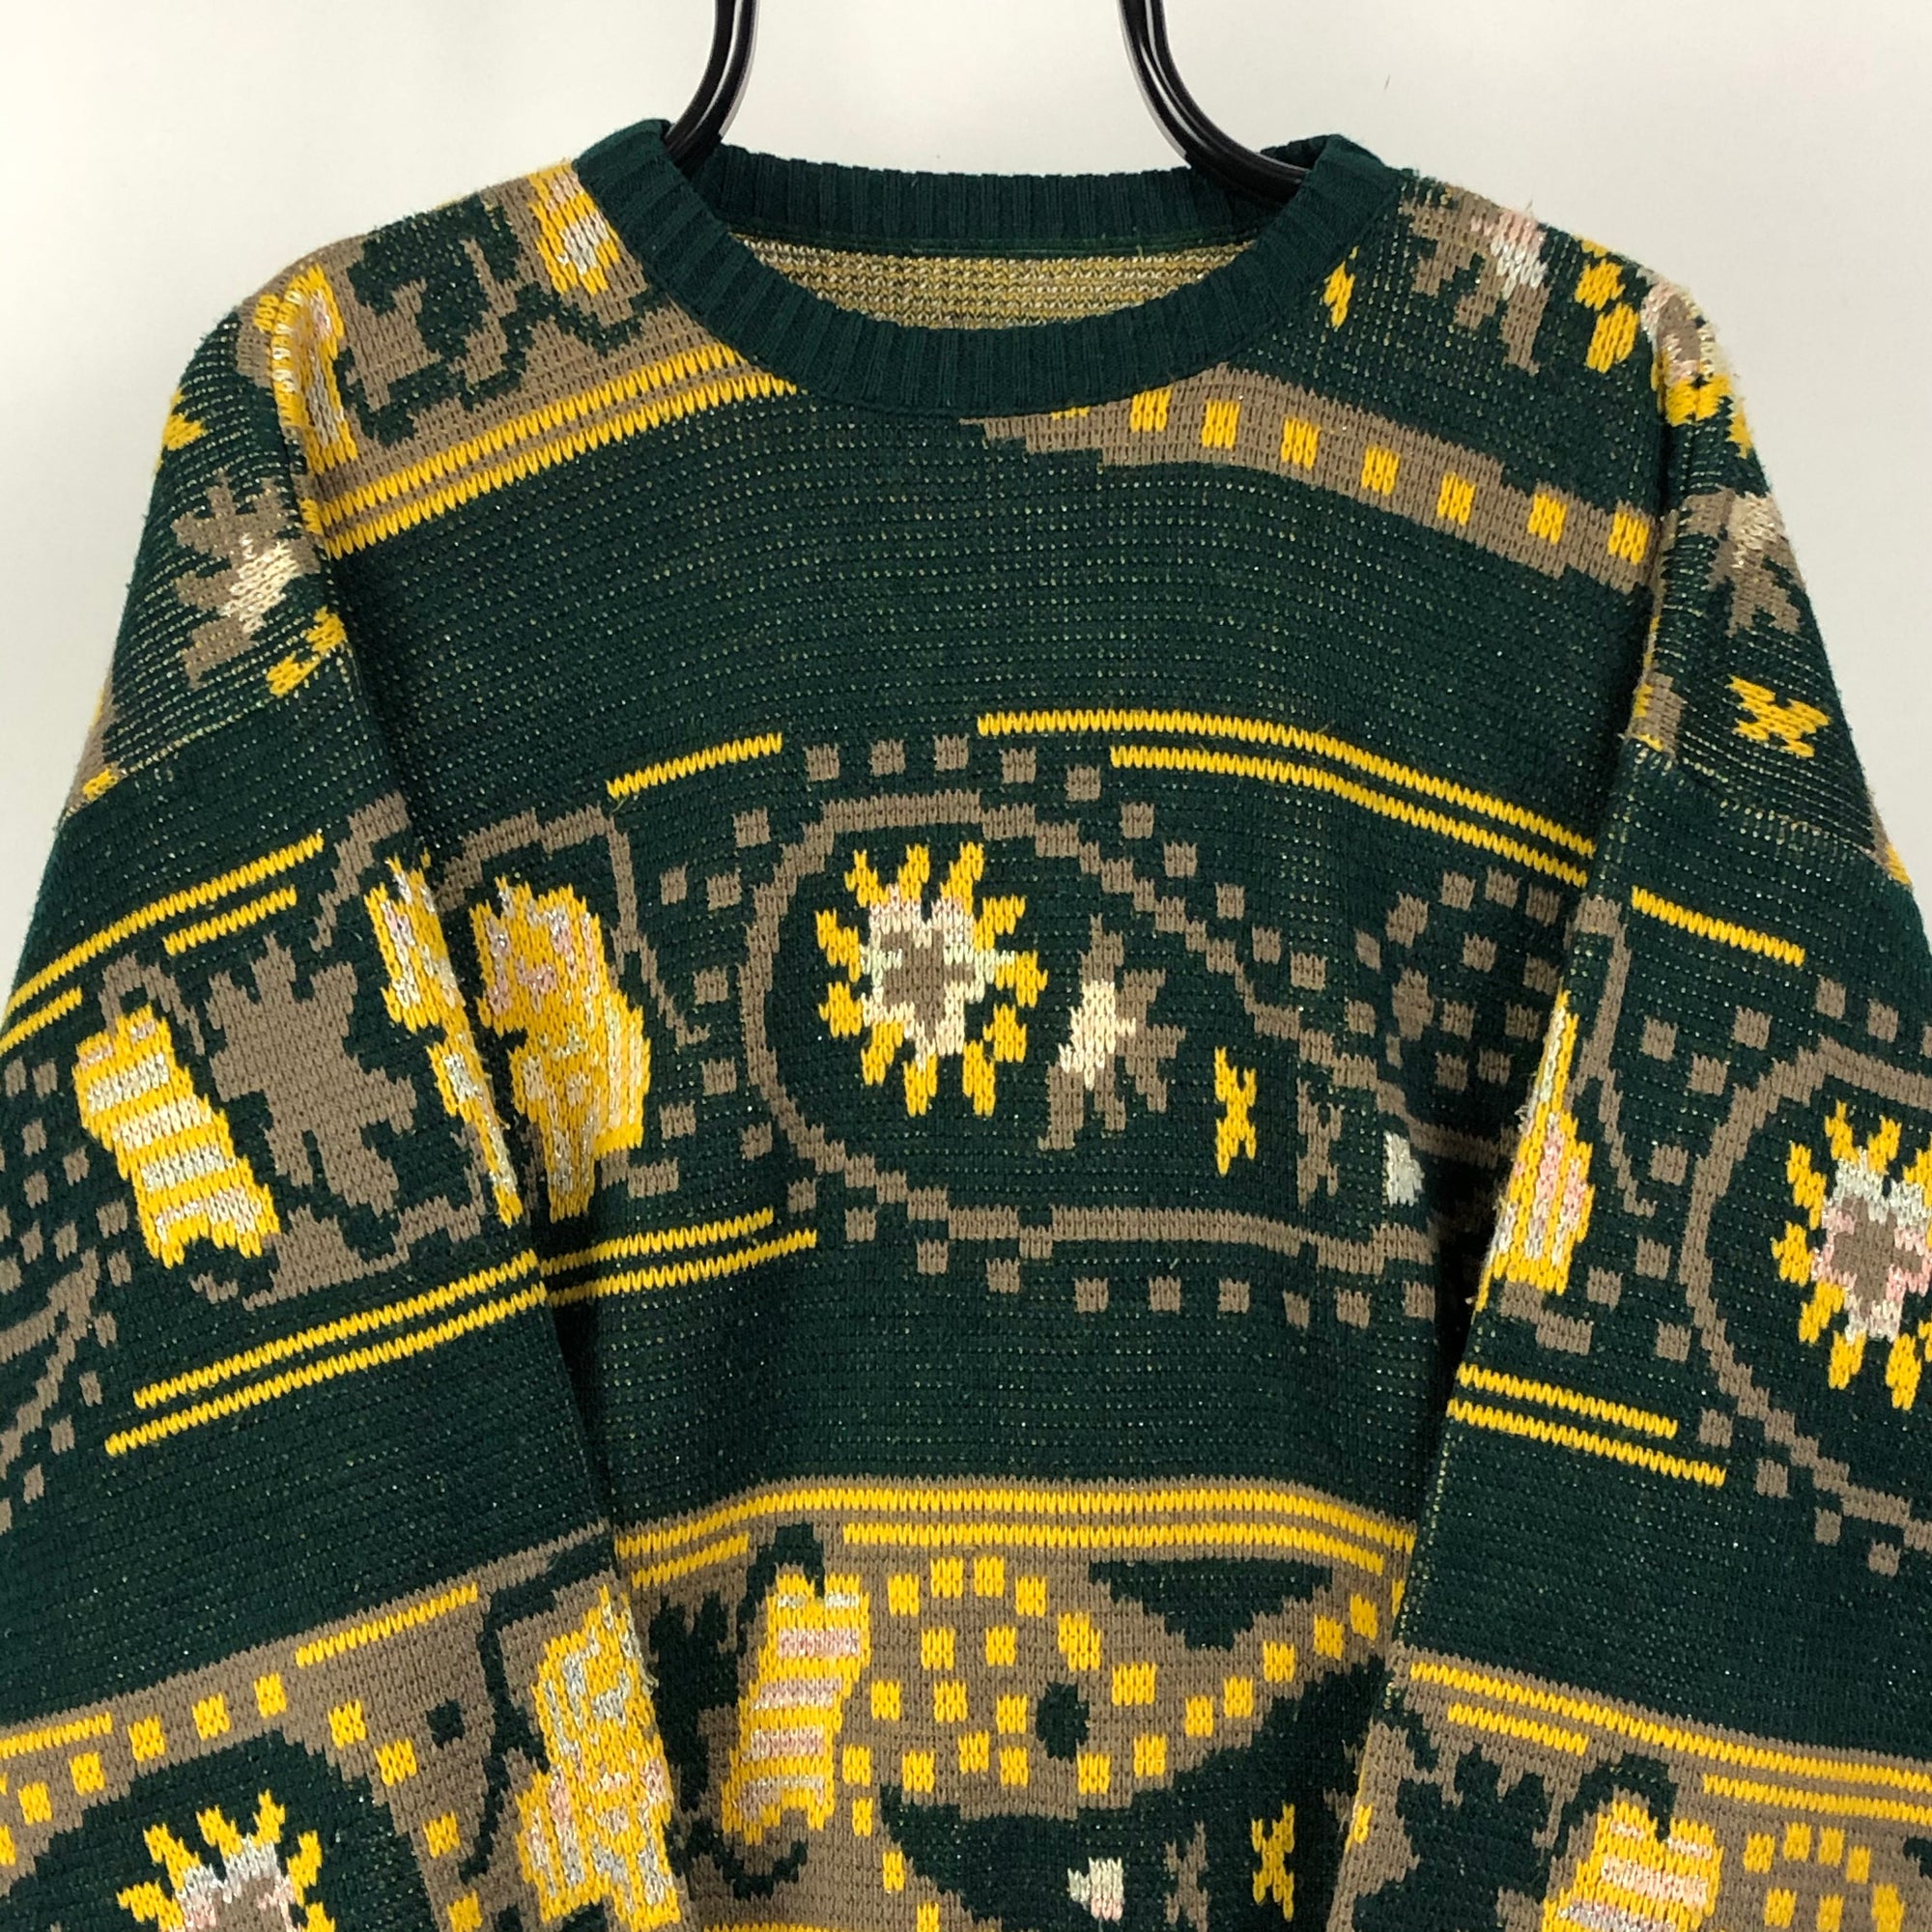 Vintage Green Patterned Sweater - Men’s Small/Women’s Medium